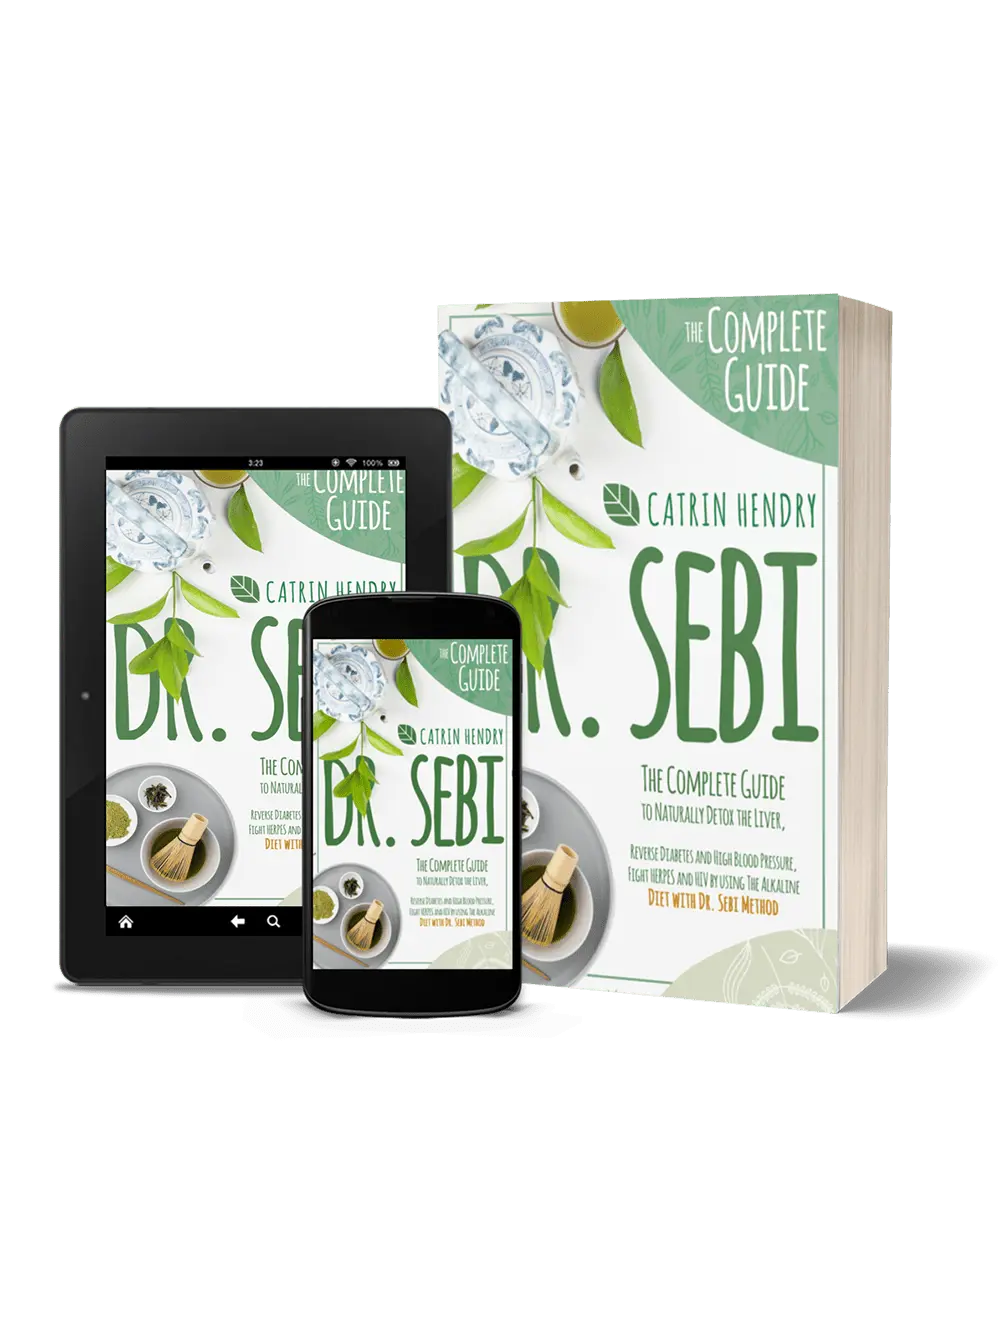 Dr. Sebi’s Secrets To Natural Healing With Medicinal Plants Bundle